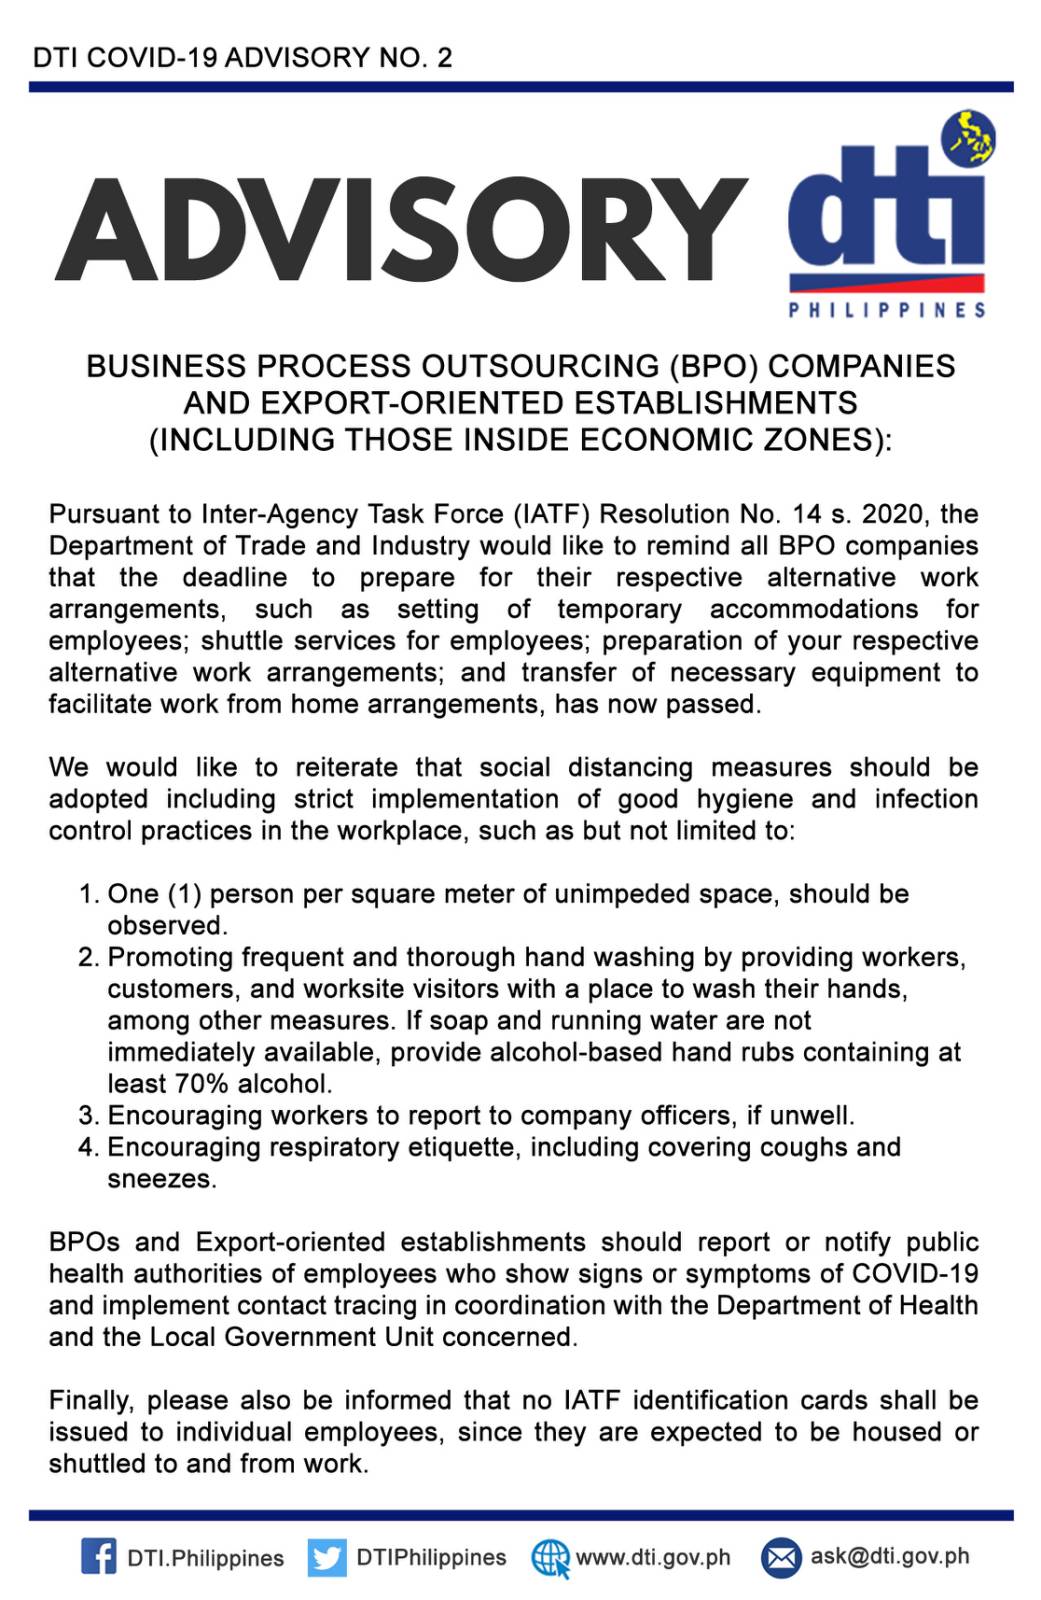 for BPO Companies and Export-Oriented Establishments (including those inside Economic Zones)